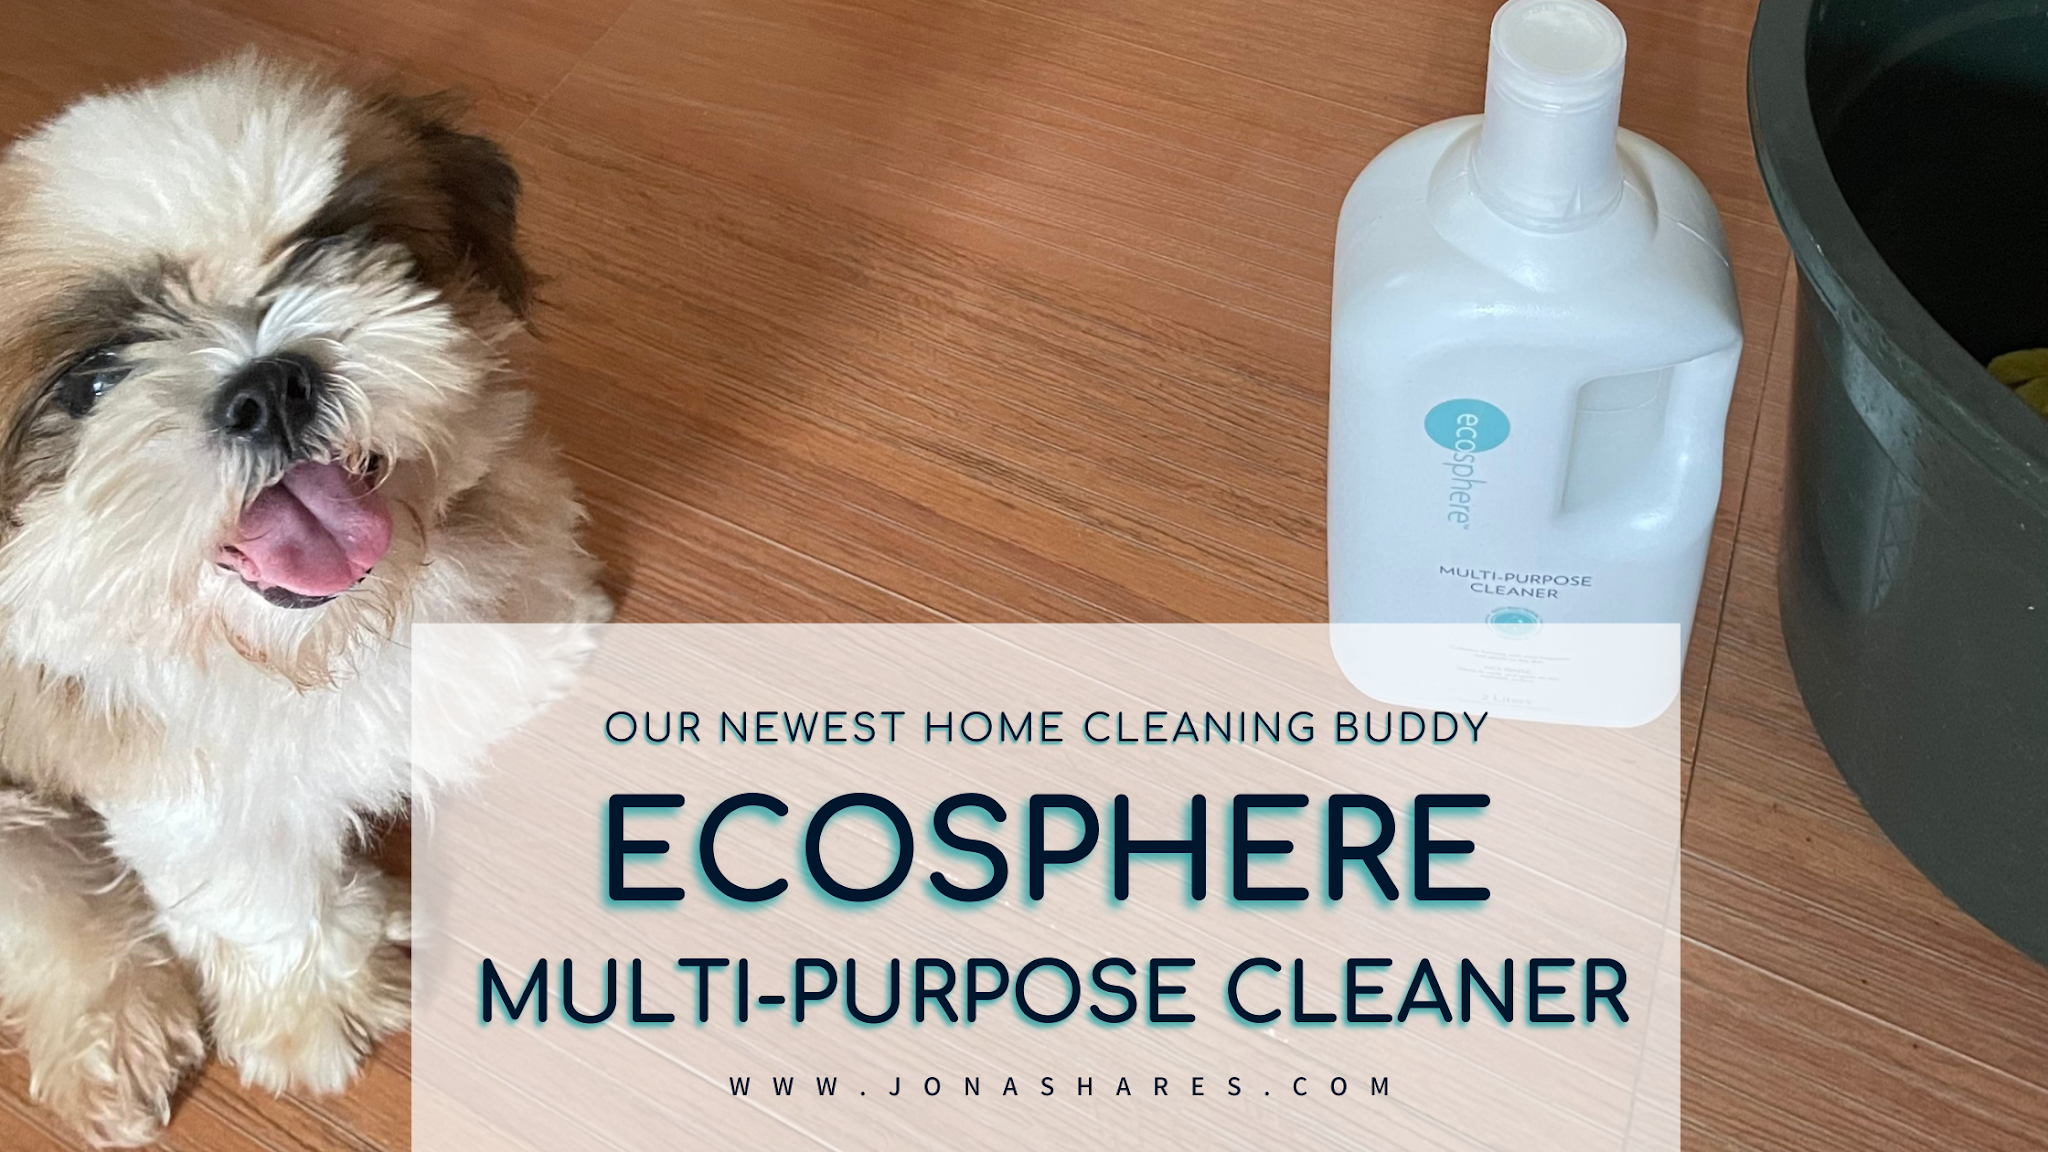 Nu Skin's Ecosphere Multi-Purpose Cleaner